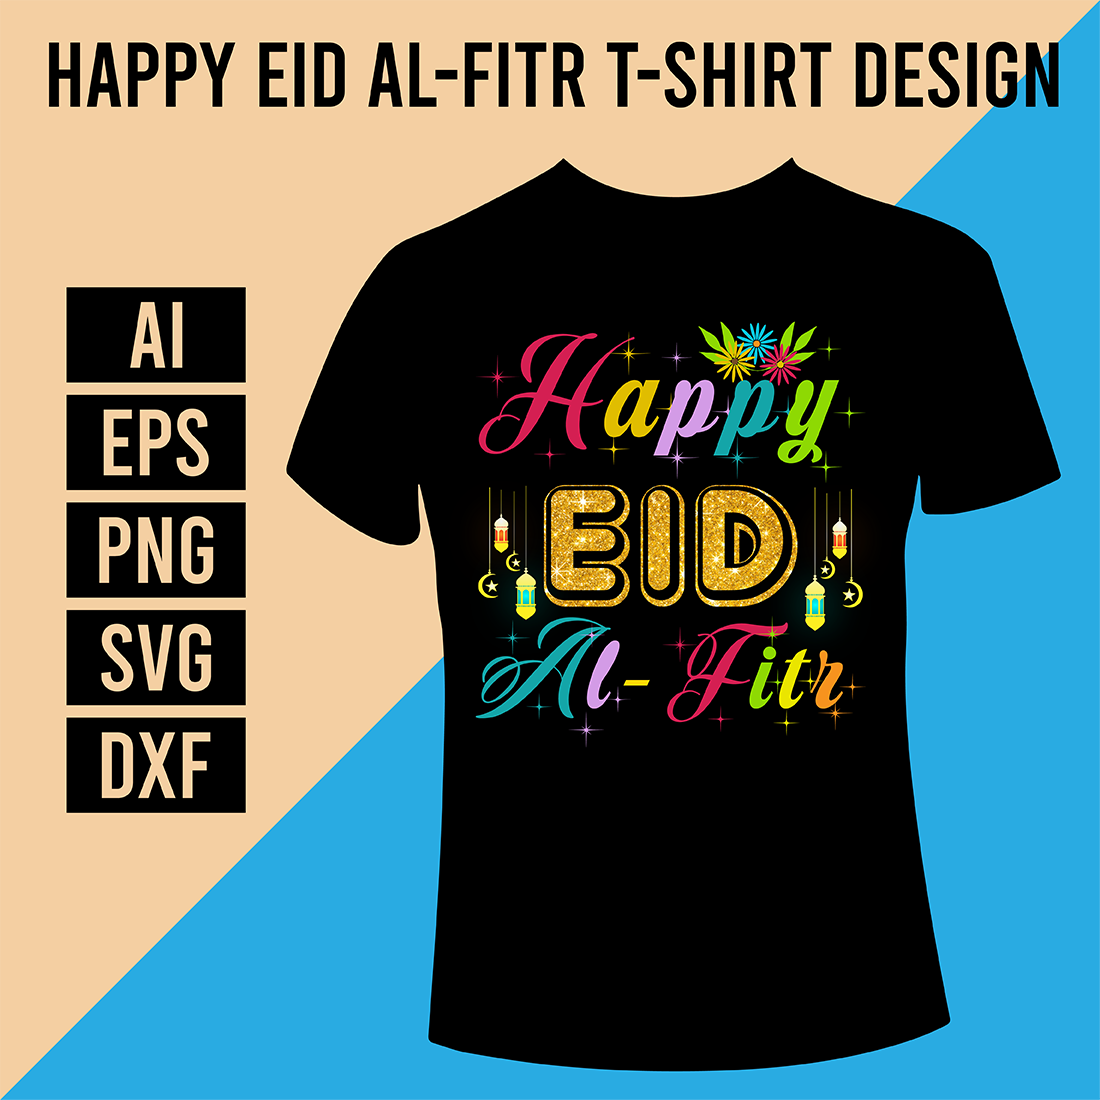 Happy Eid al-Fitr T-Shirt Design cover image.